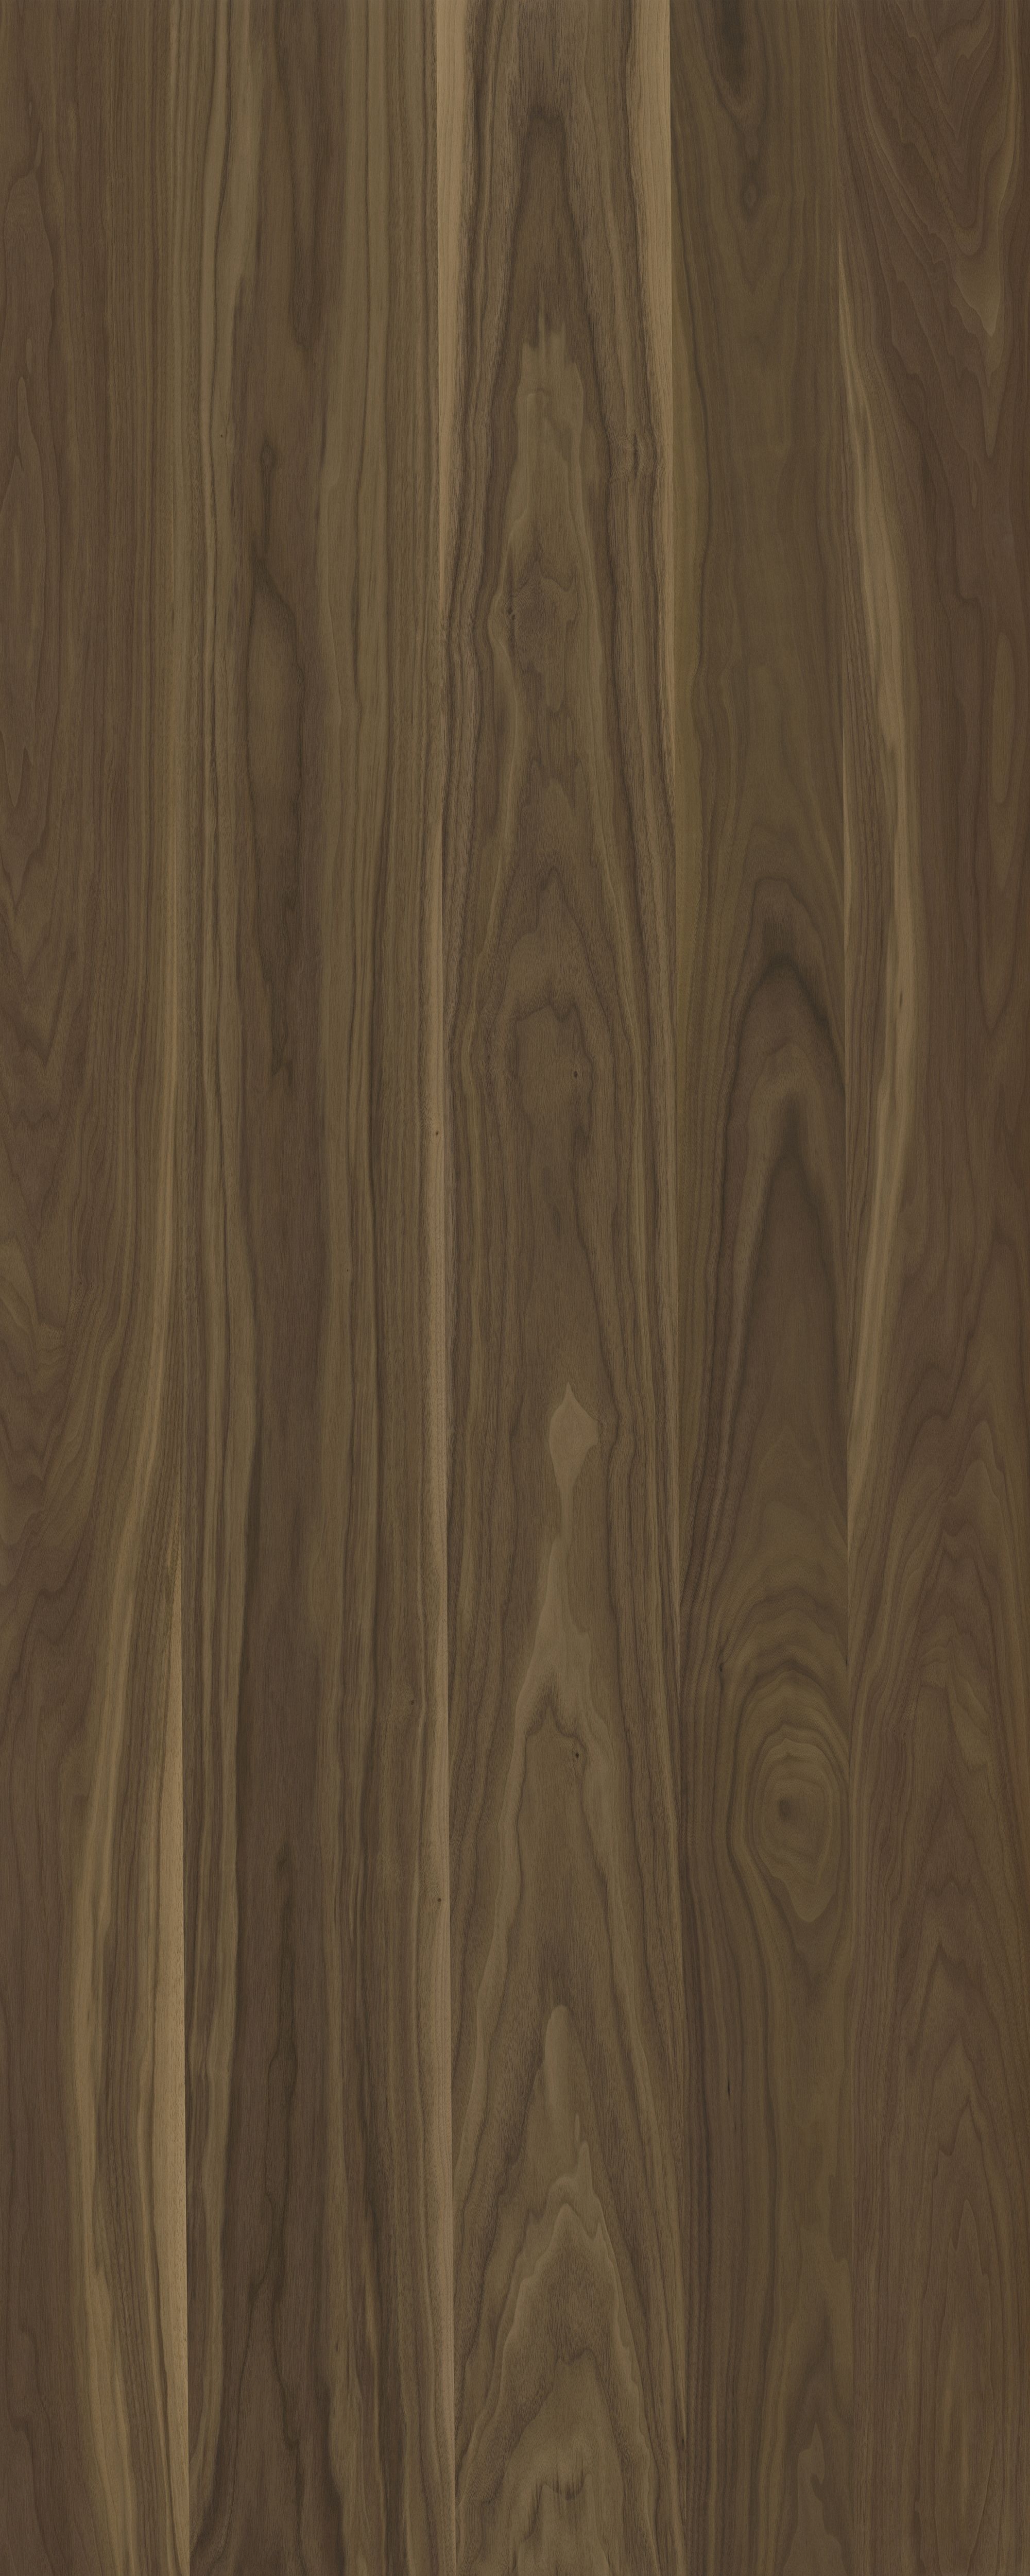 Интерьерная панель American Walnut 3000*1200*4 NT-17.1.1 Natural глянцевый